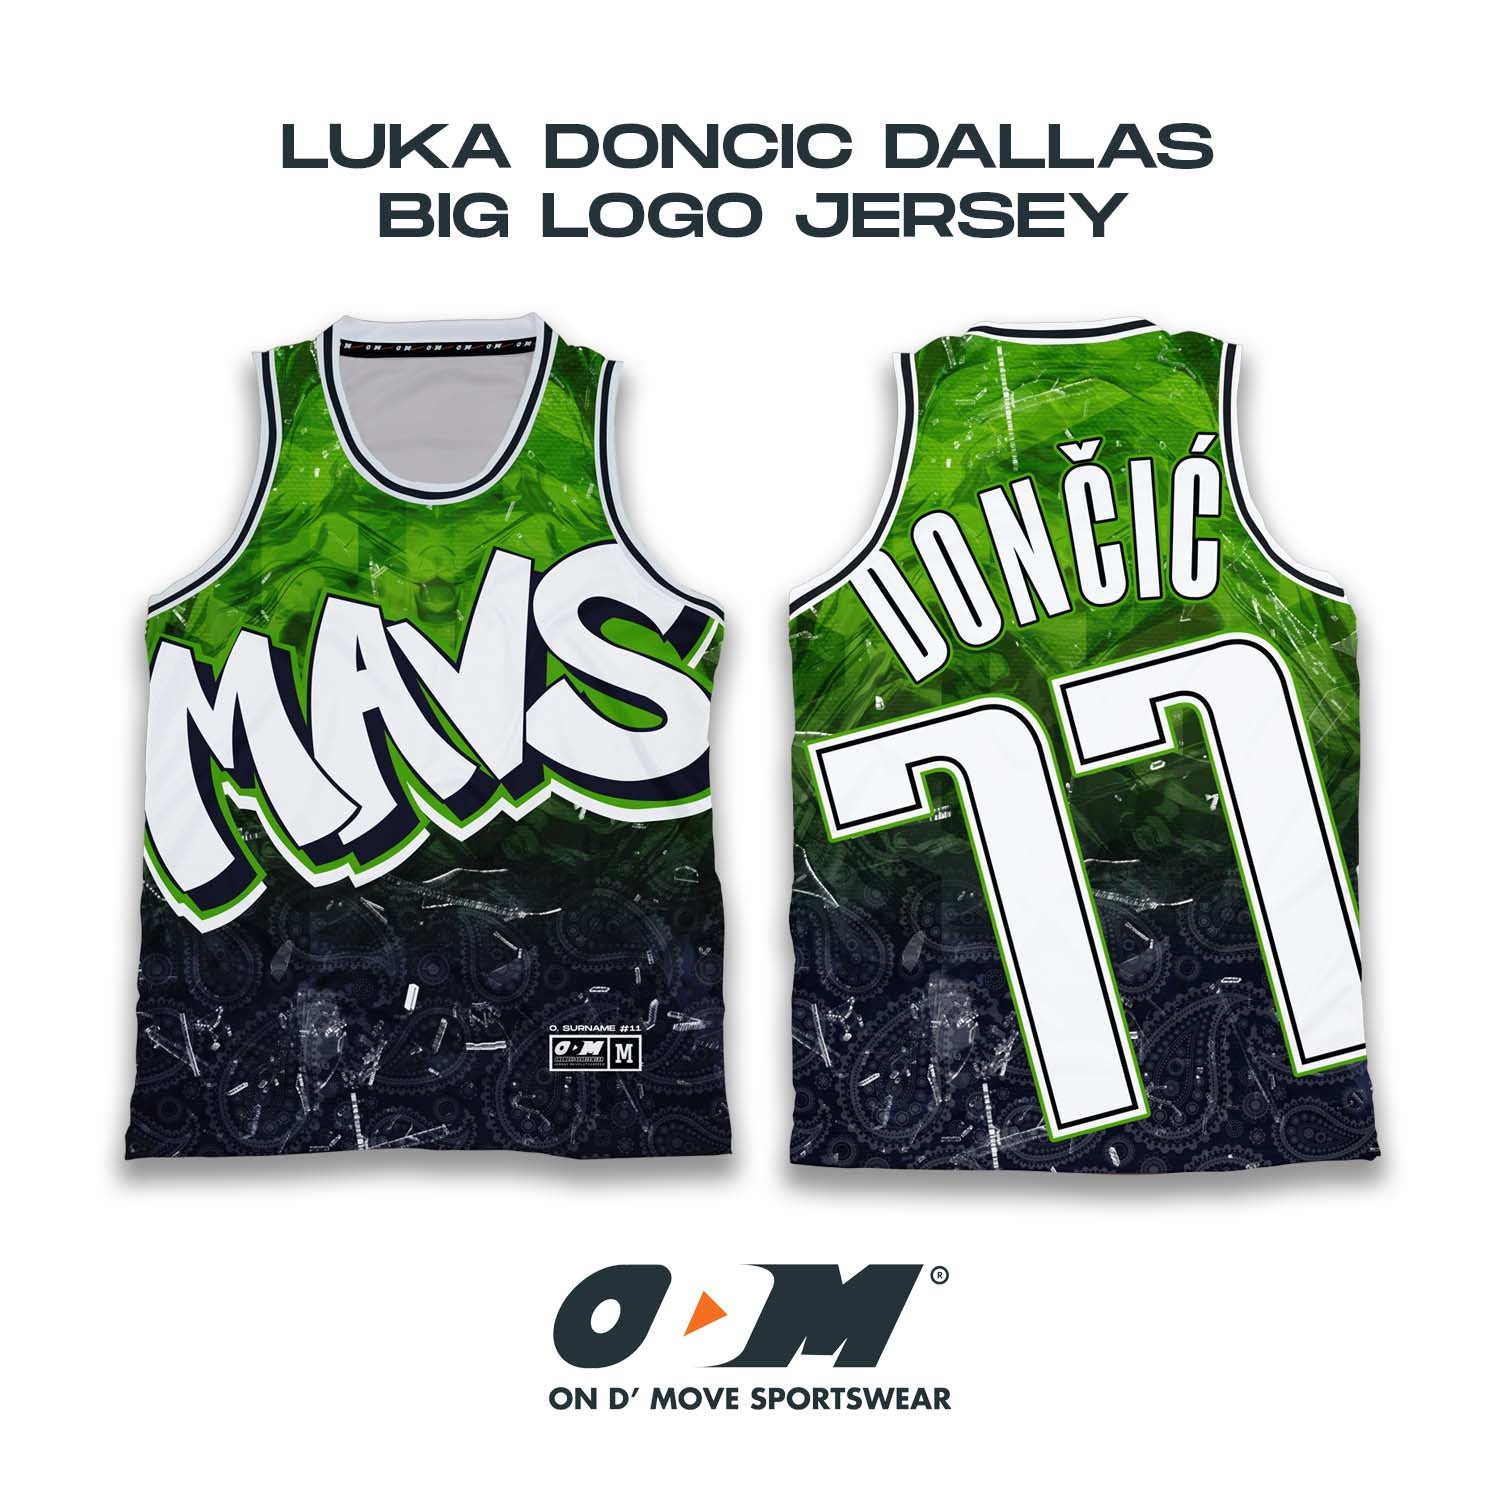 Luka Doncic Dallas Big Logo Jersey